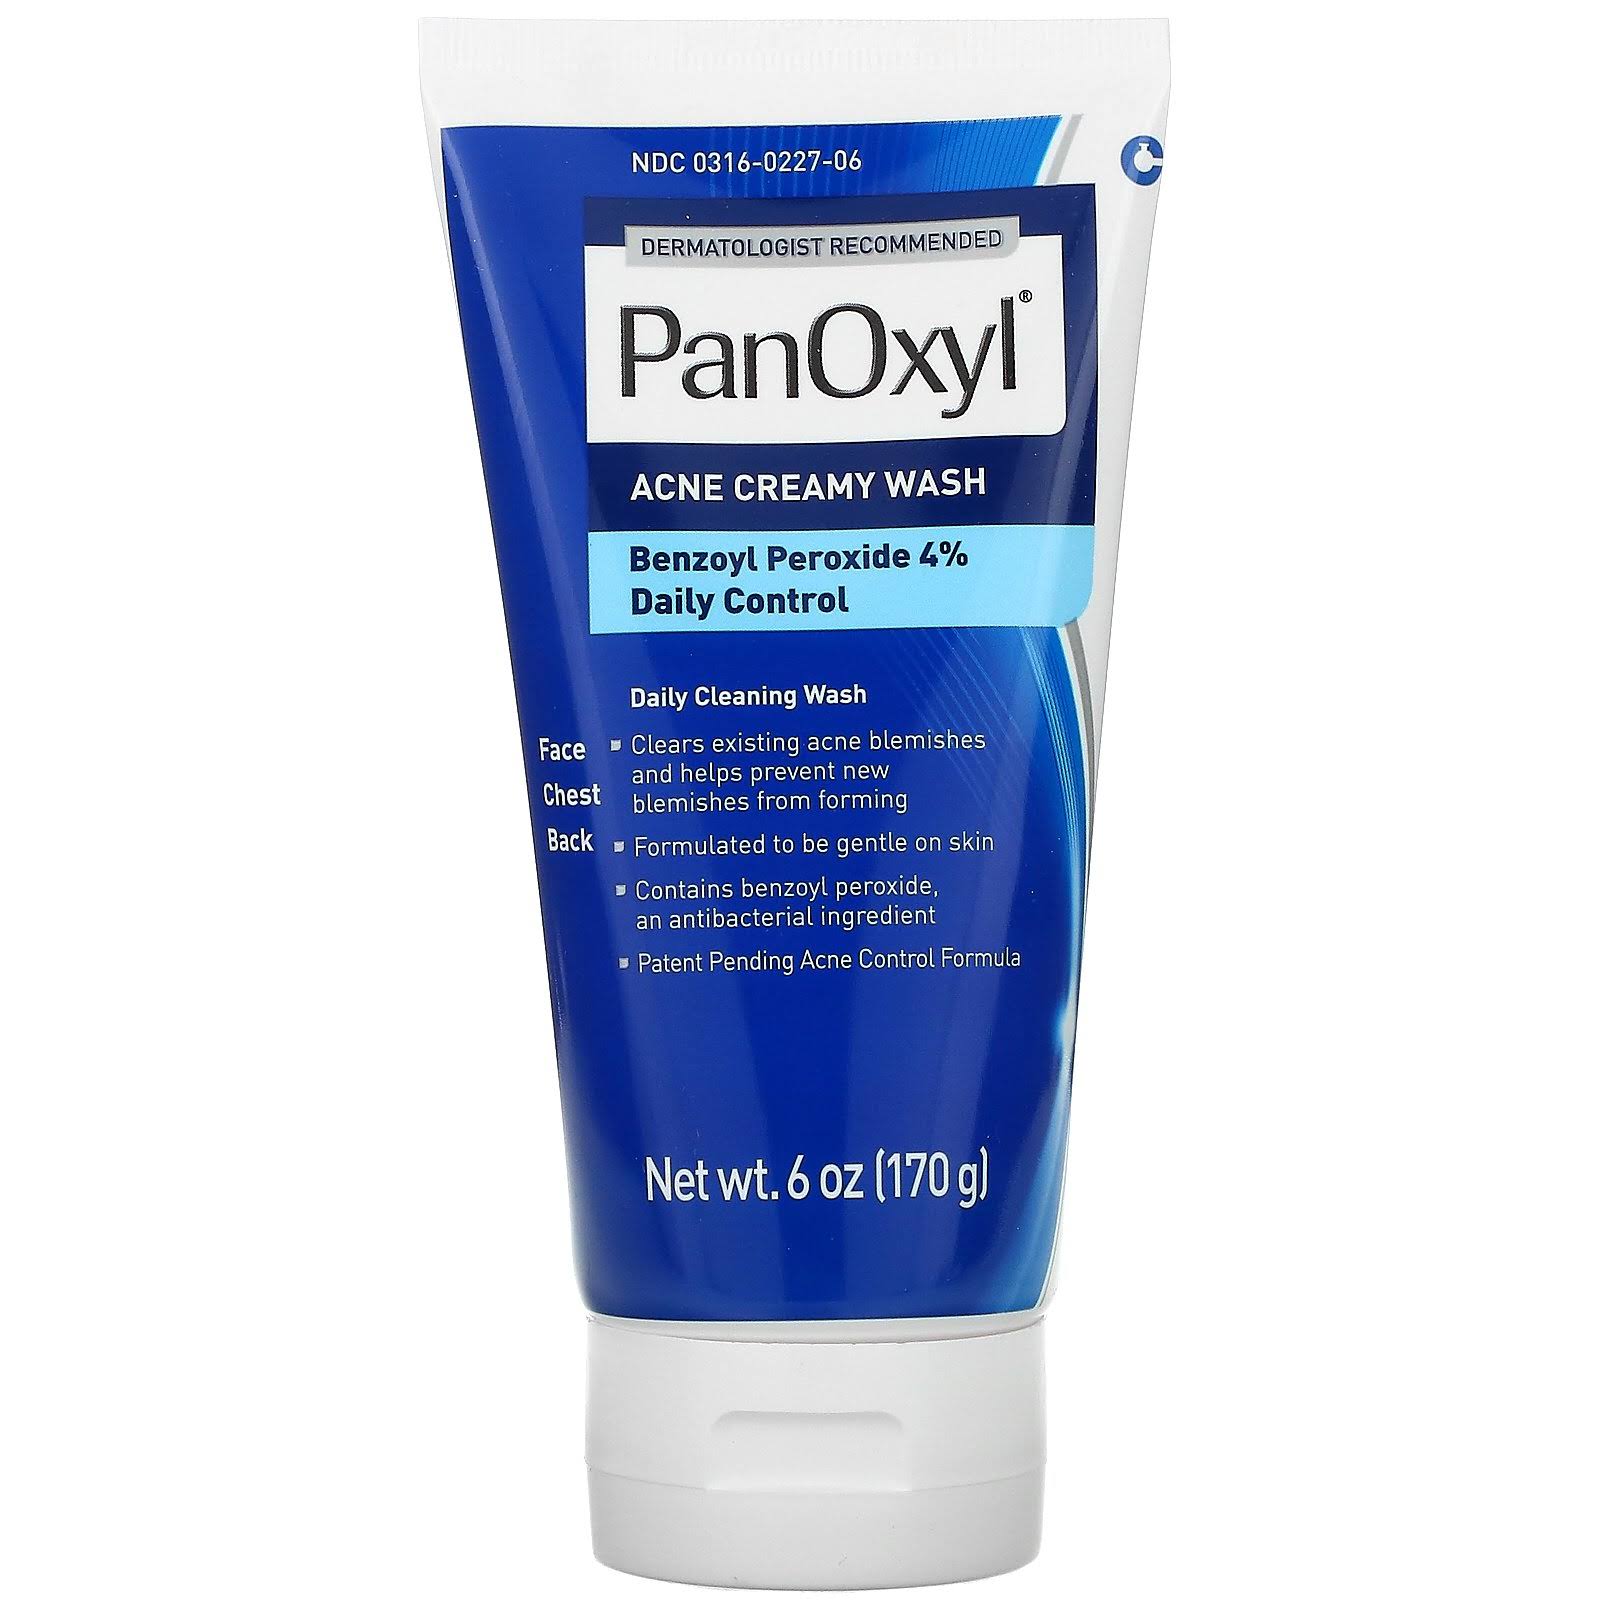 Panoxyl Acne Creamy Wash, Daily Control - 6 oz